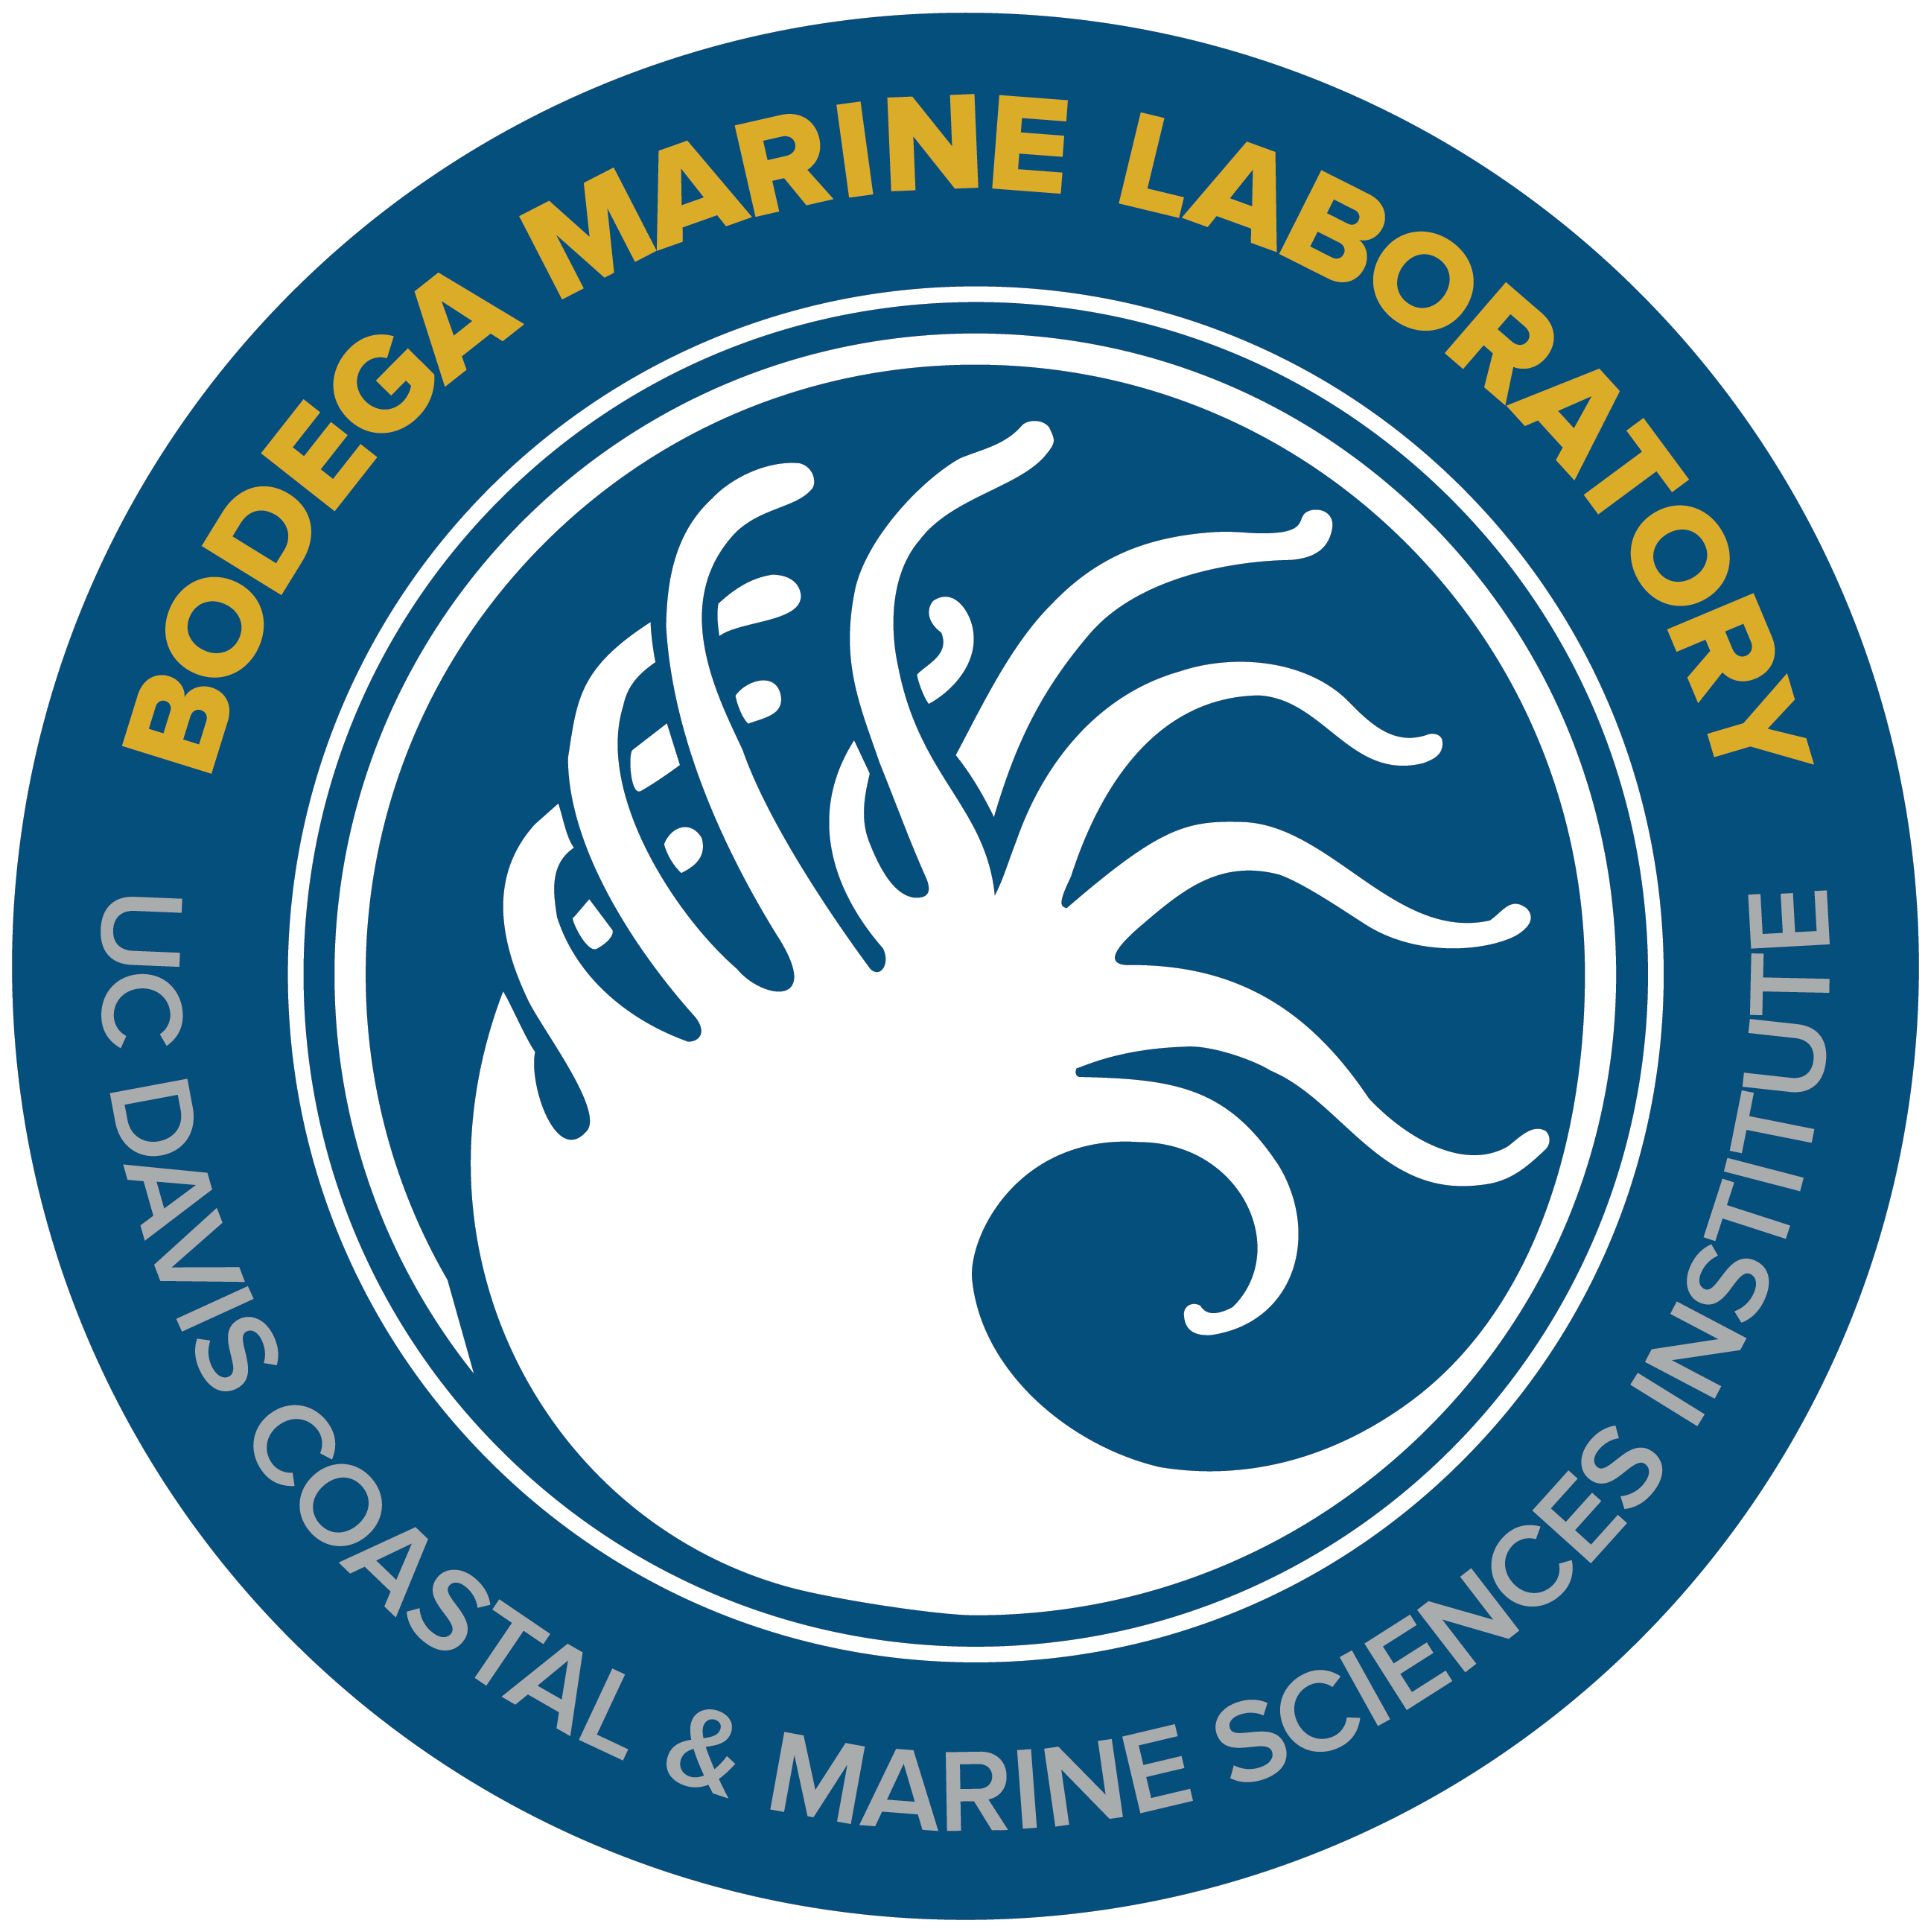 Bodega Marine Laboratory